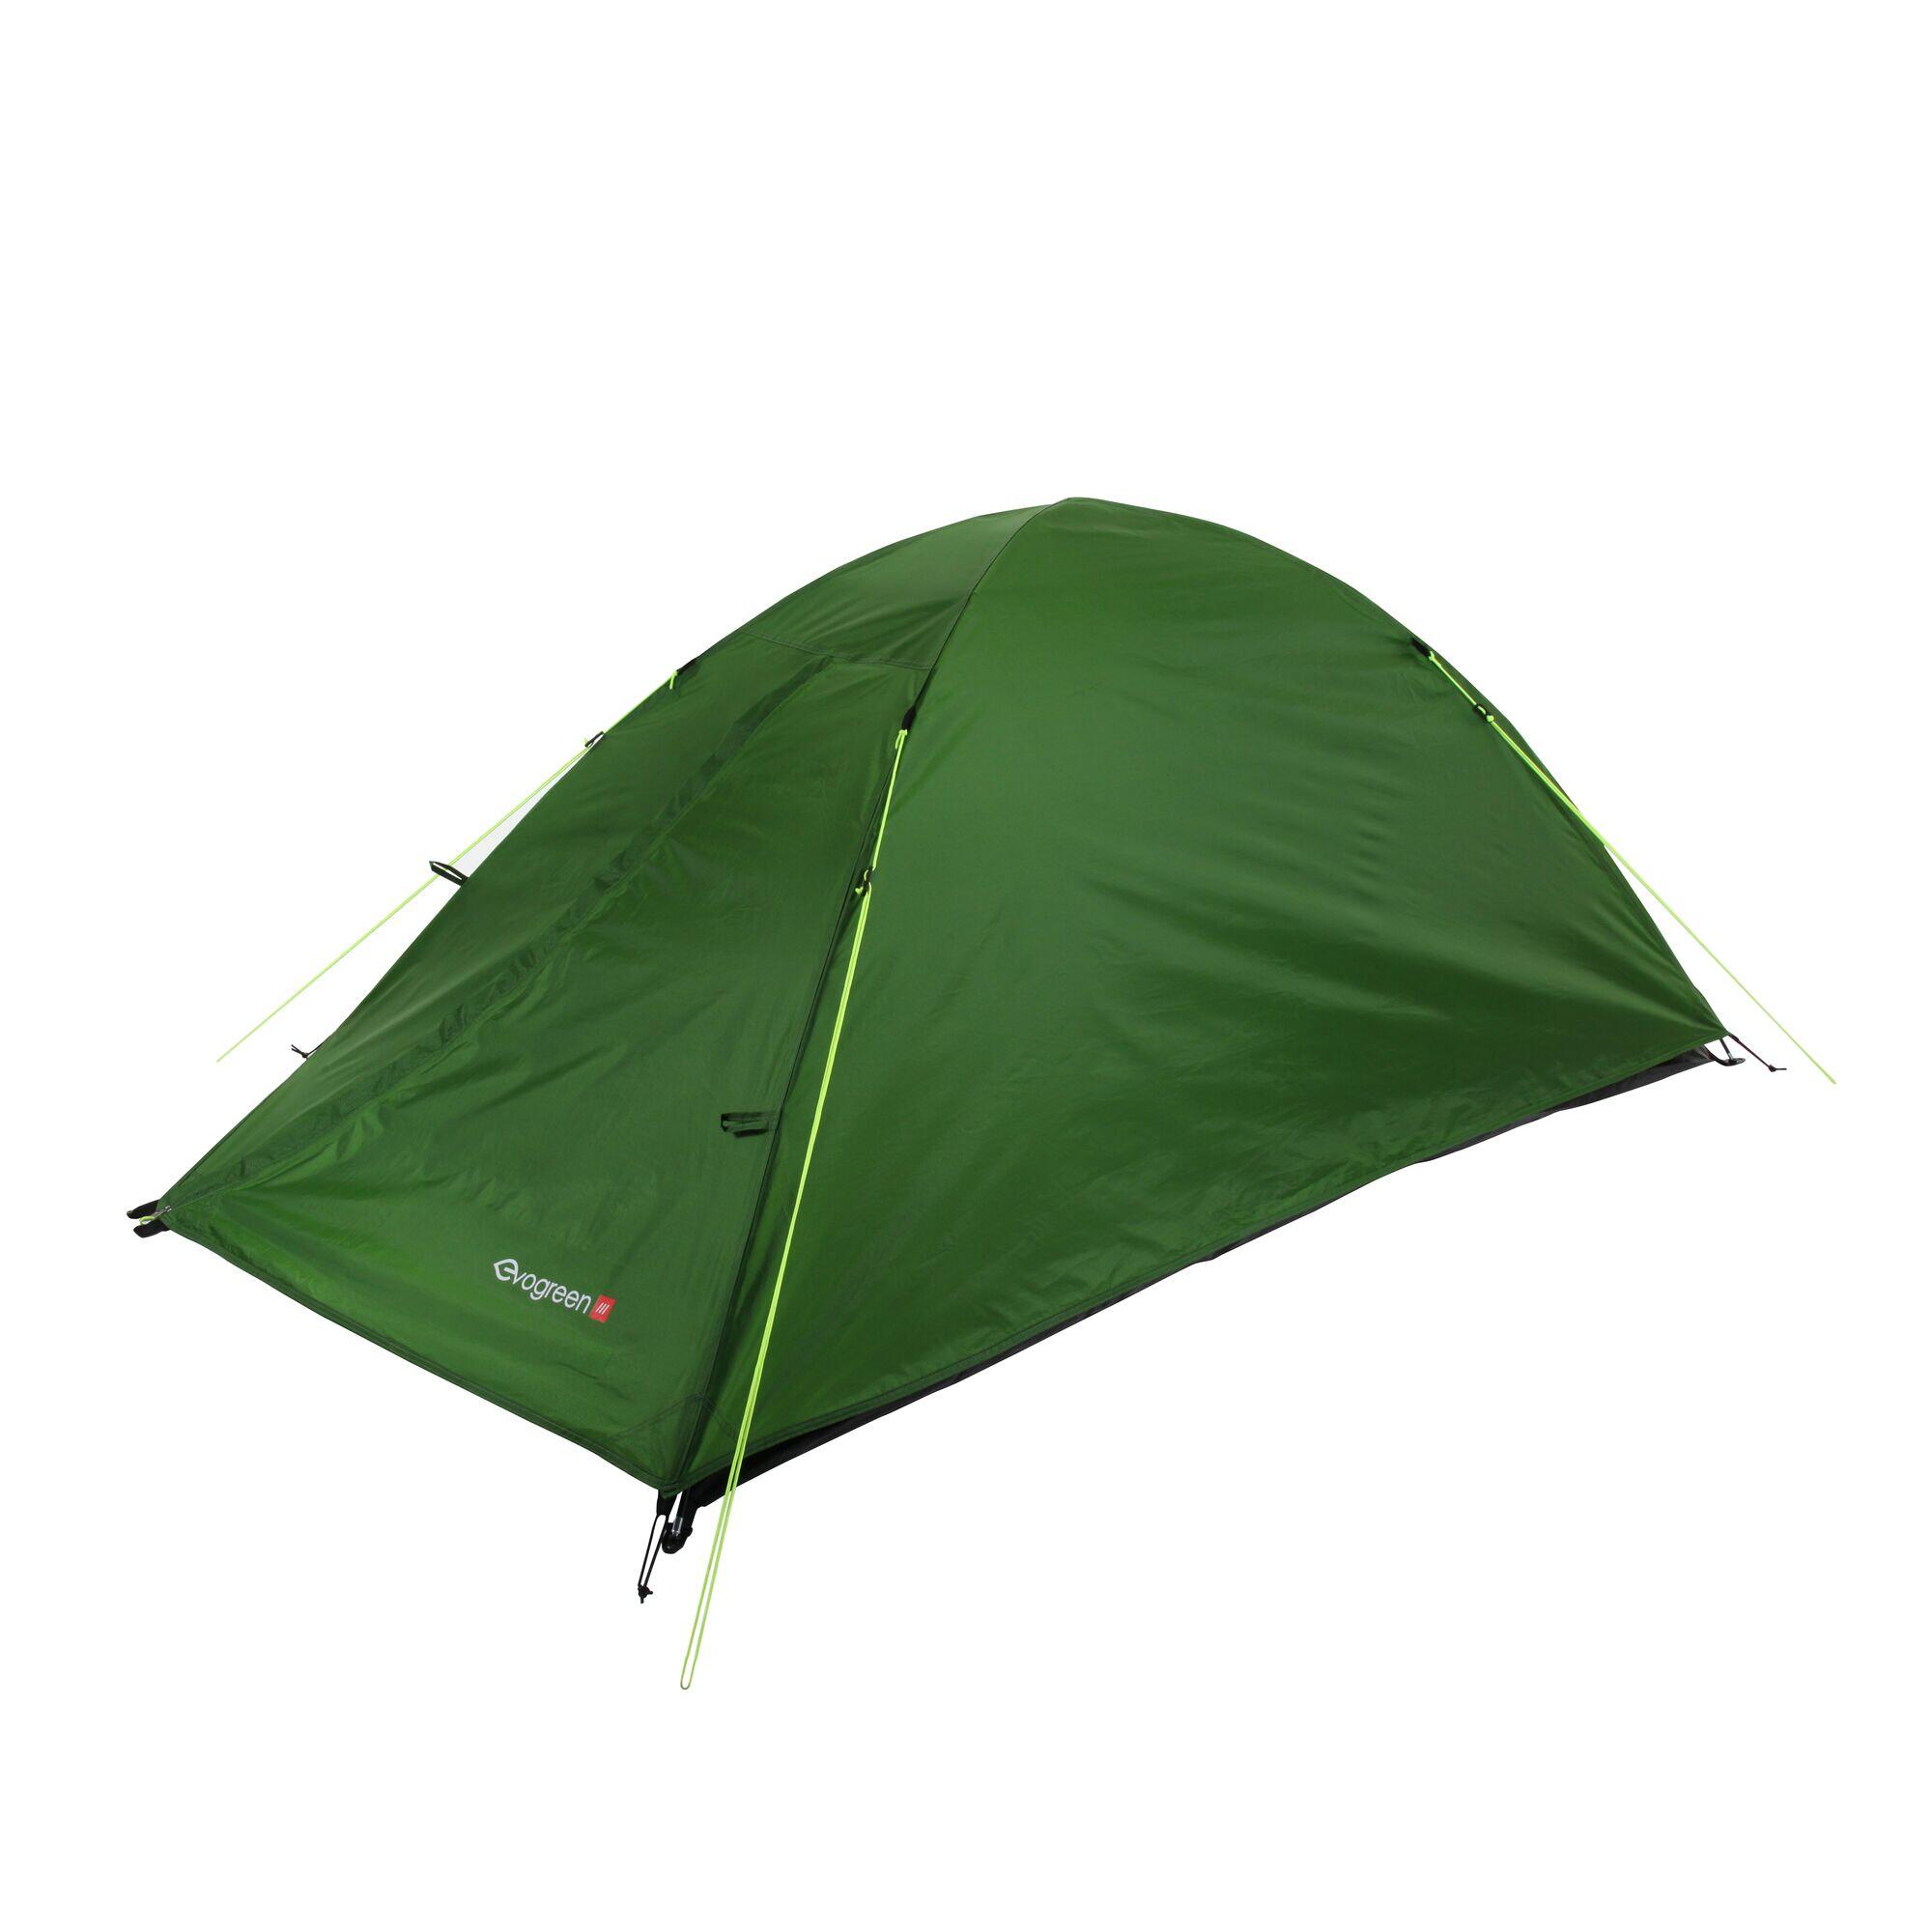 Evogreen 3-Man Adults' Camping Camping Tent 1/5